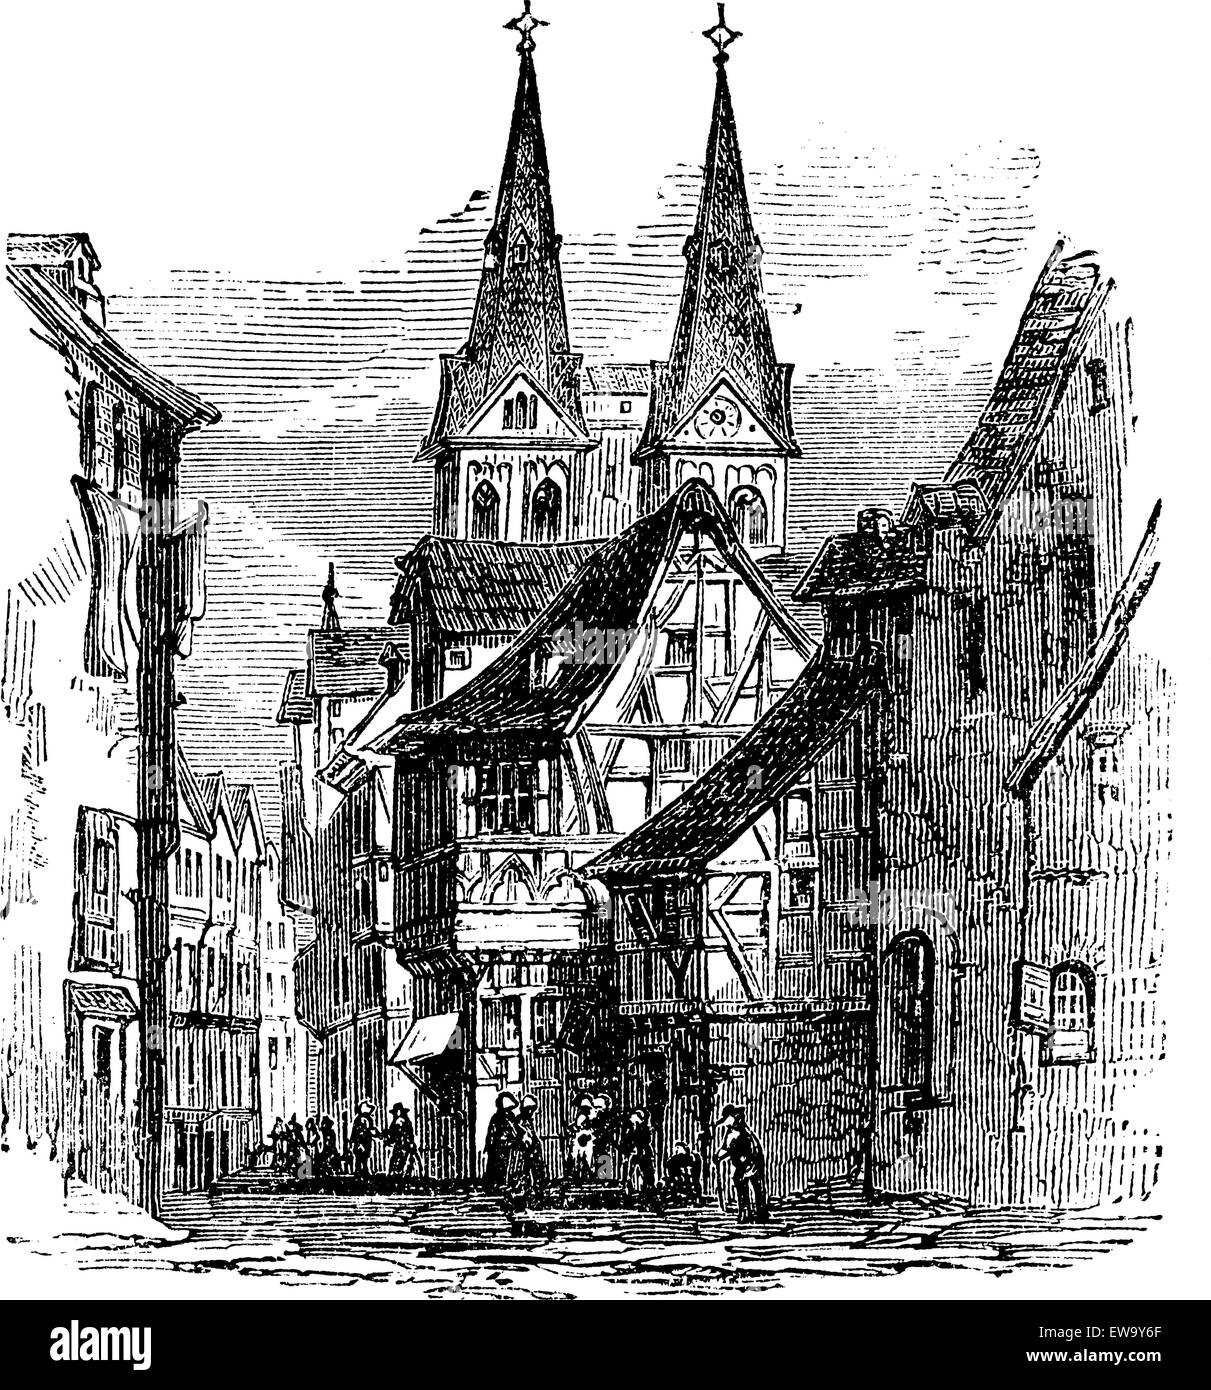 Boppard town in  Rhein-Hunsruck-Kreis, Rhineland-Palatinate, Germany, old engraved illustration of the  town, Boppard, Rhein-Hunsruck-Kreis, Germany, 1890s. Stock Vector